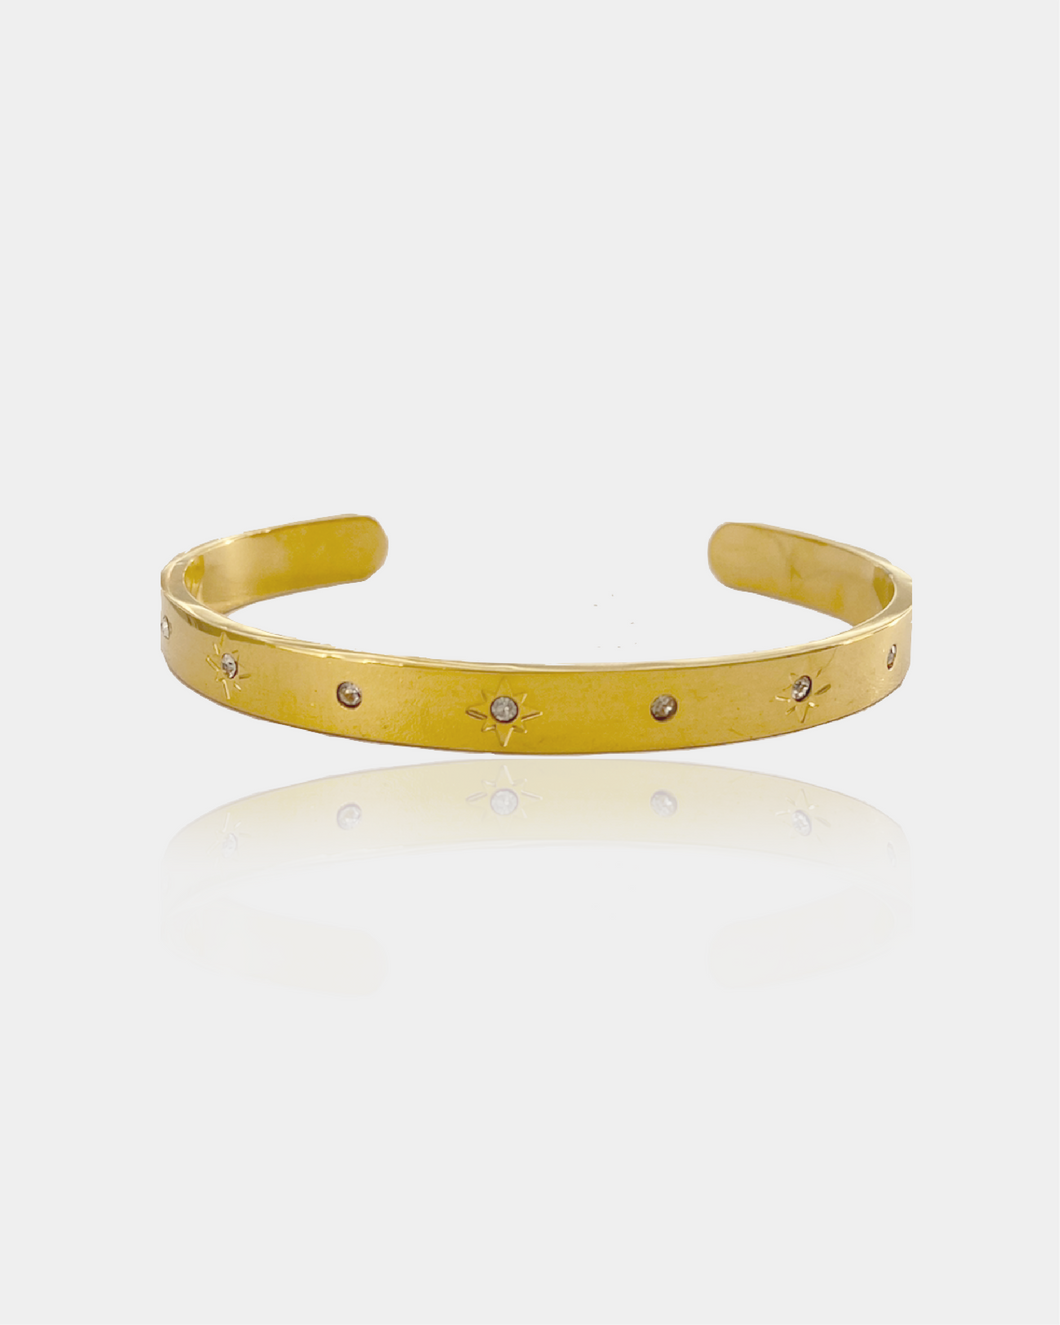 ORION Stars Gold Cuff Bracelet